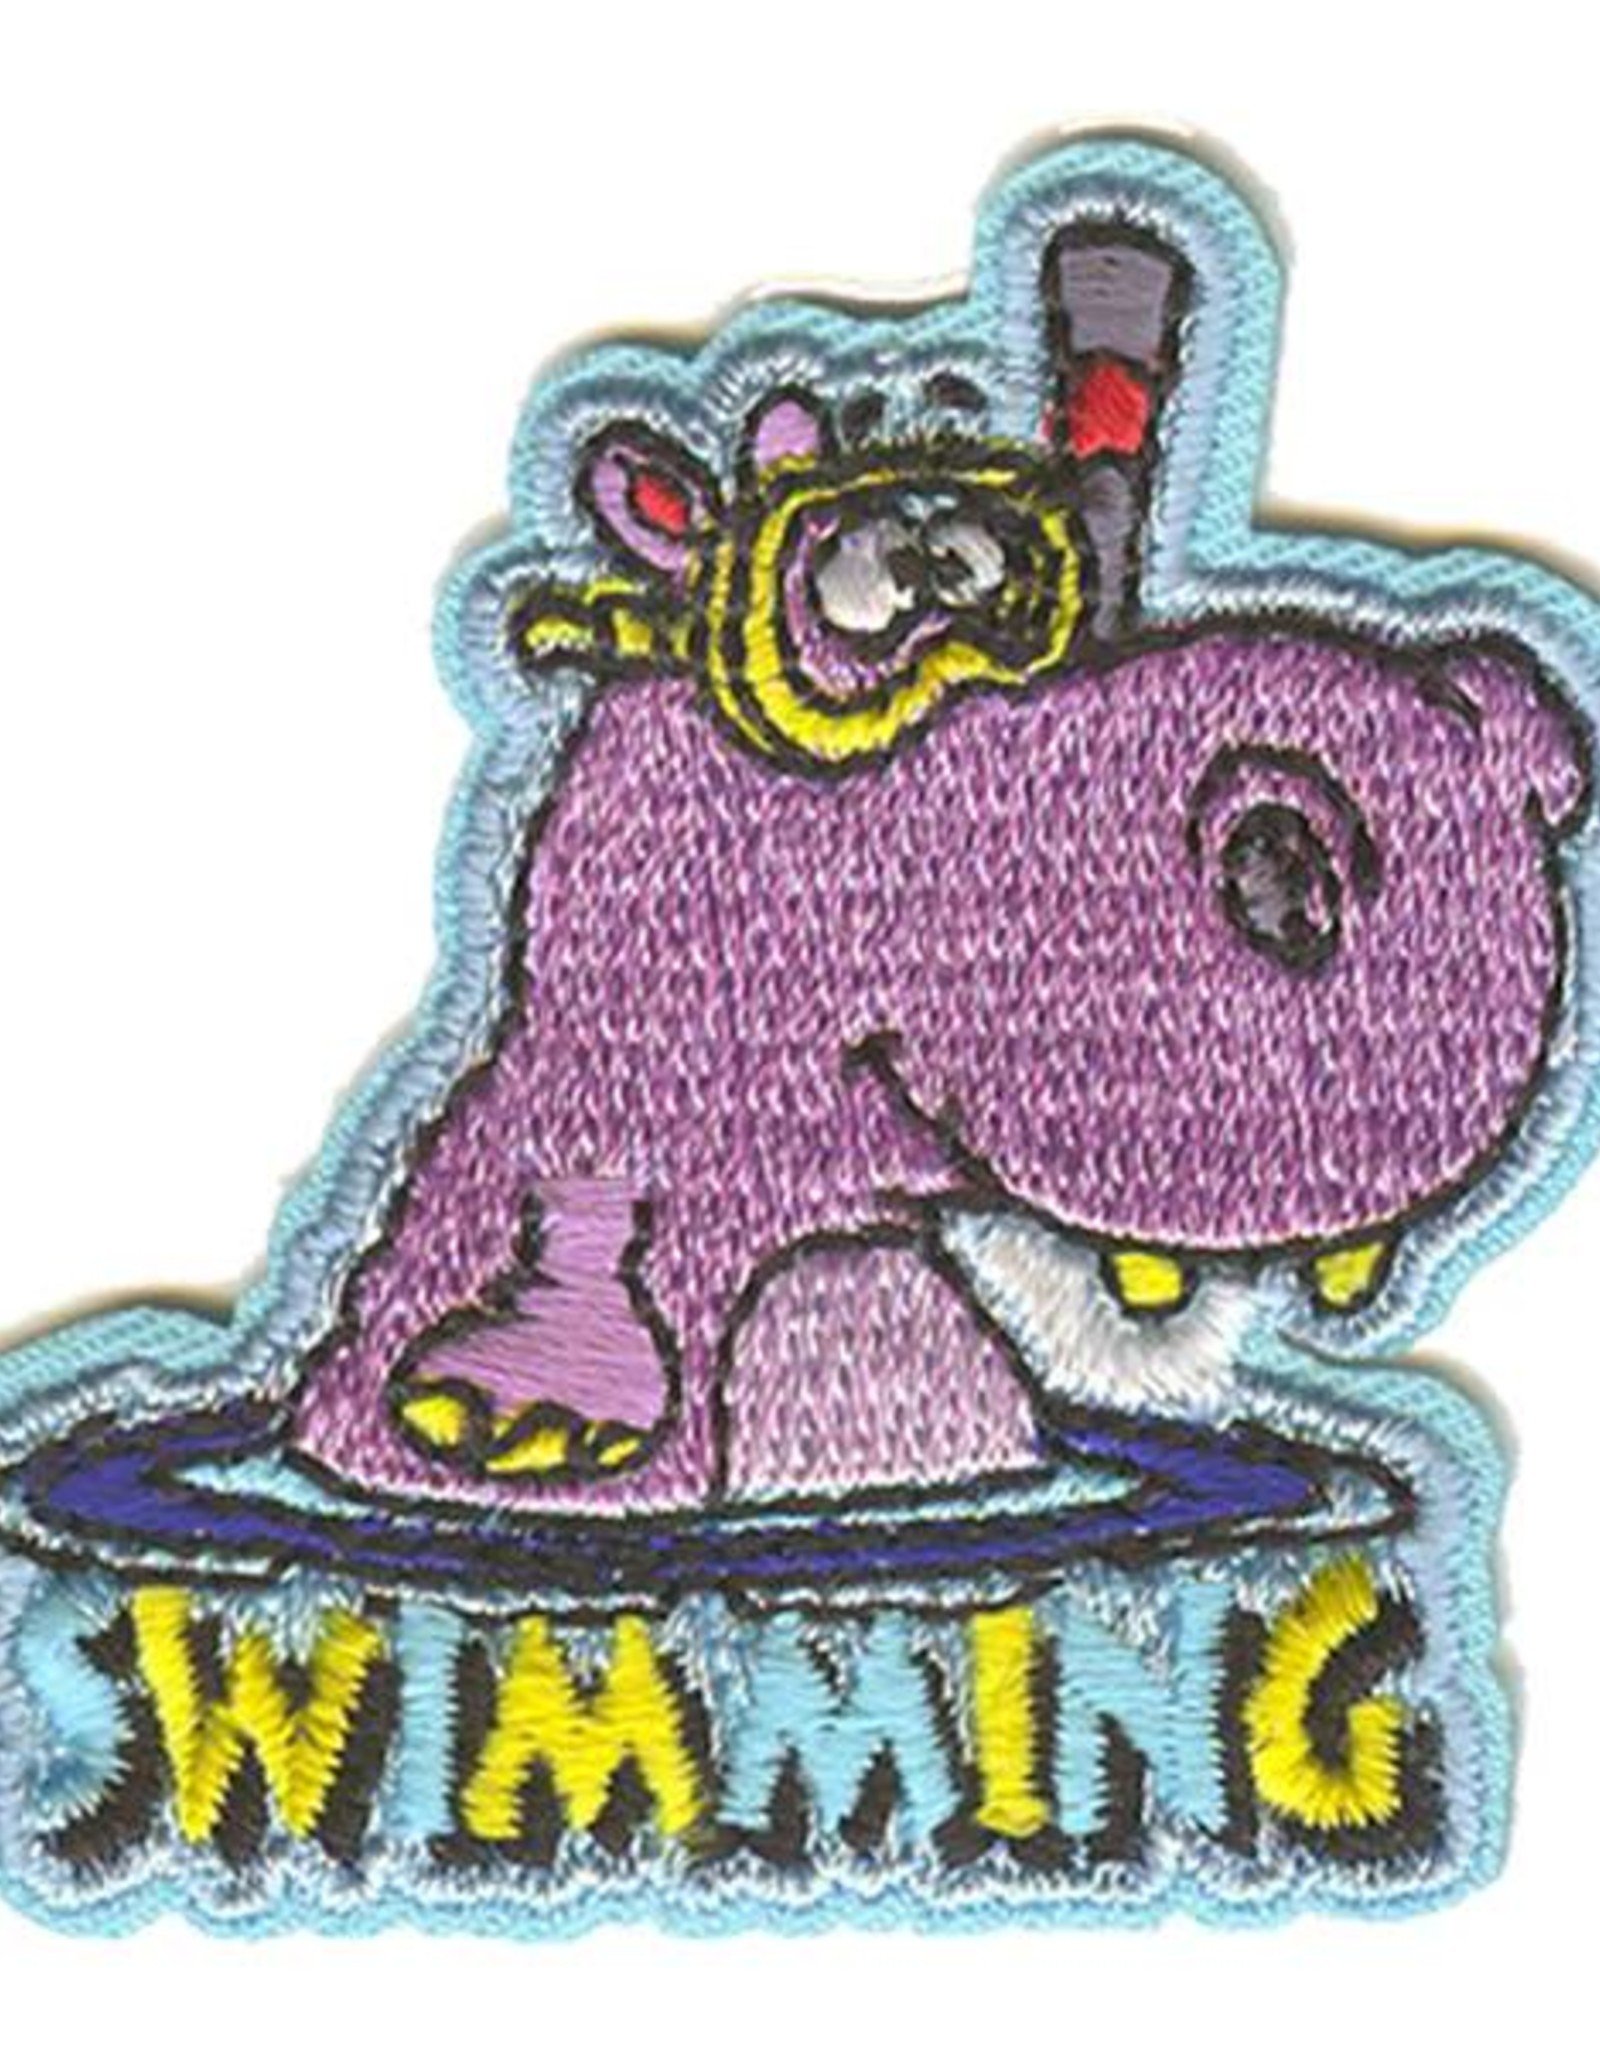 Advantage Emblem & Screen Prnt *Swimming Hippo Fun Patch